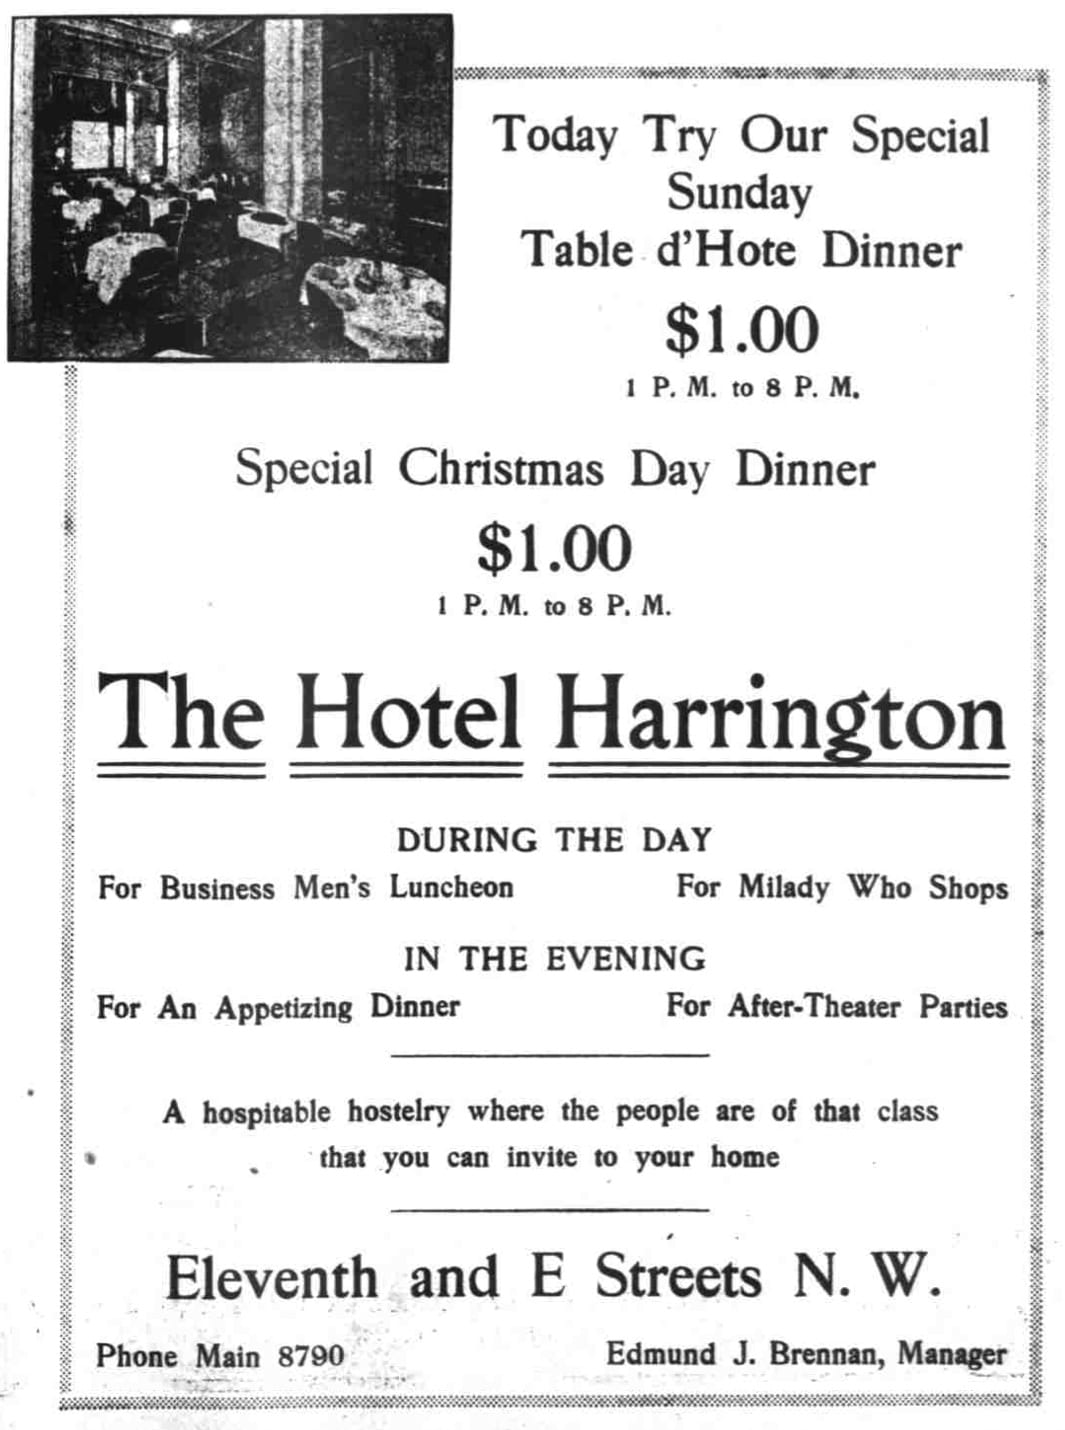 Hotel Harrington Christmas 1914 advertisement - December 20th, 1914 (Washington Herald)